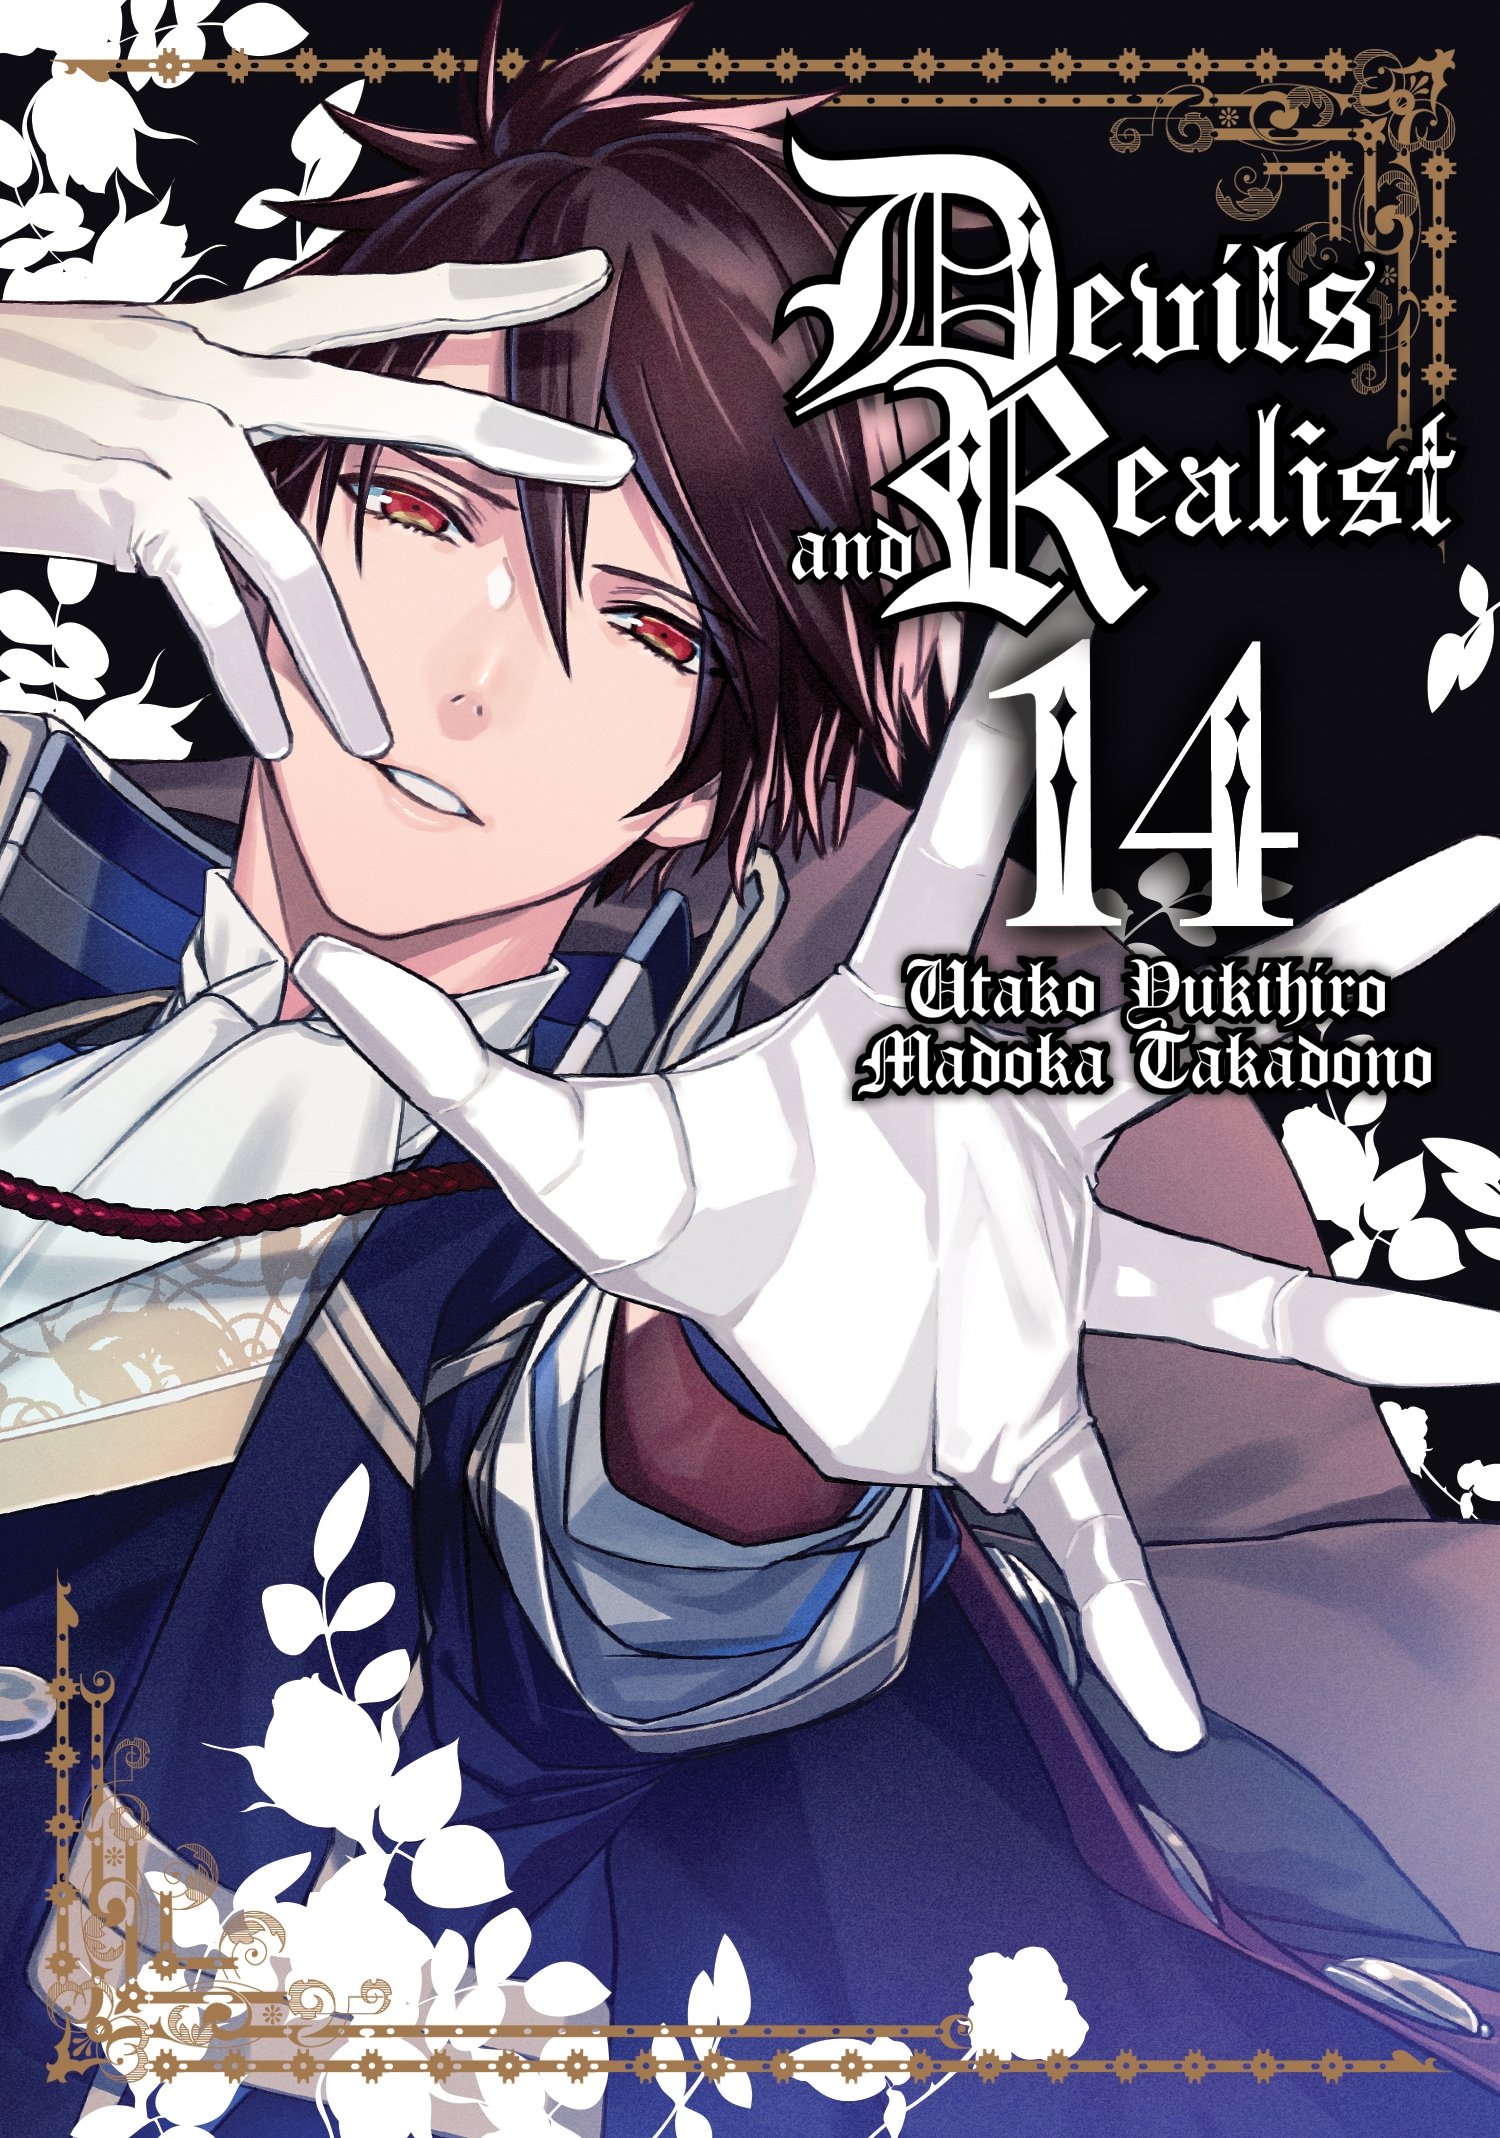 Devils and Realist Vol. 14 | Madoka Takadono